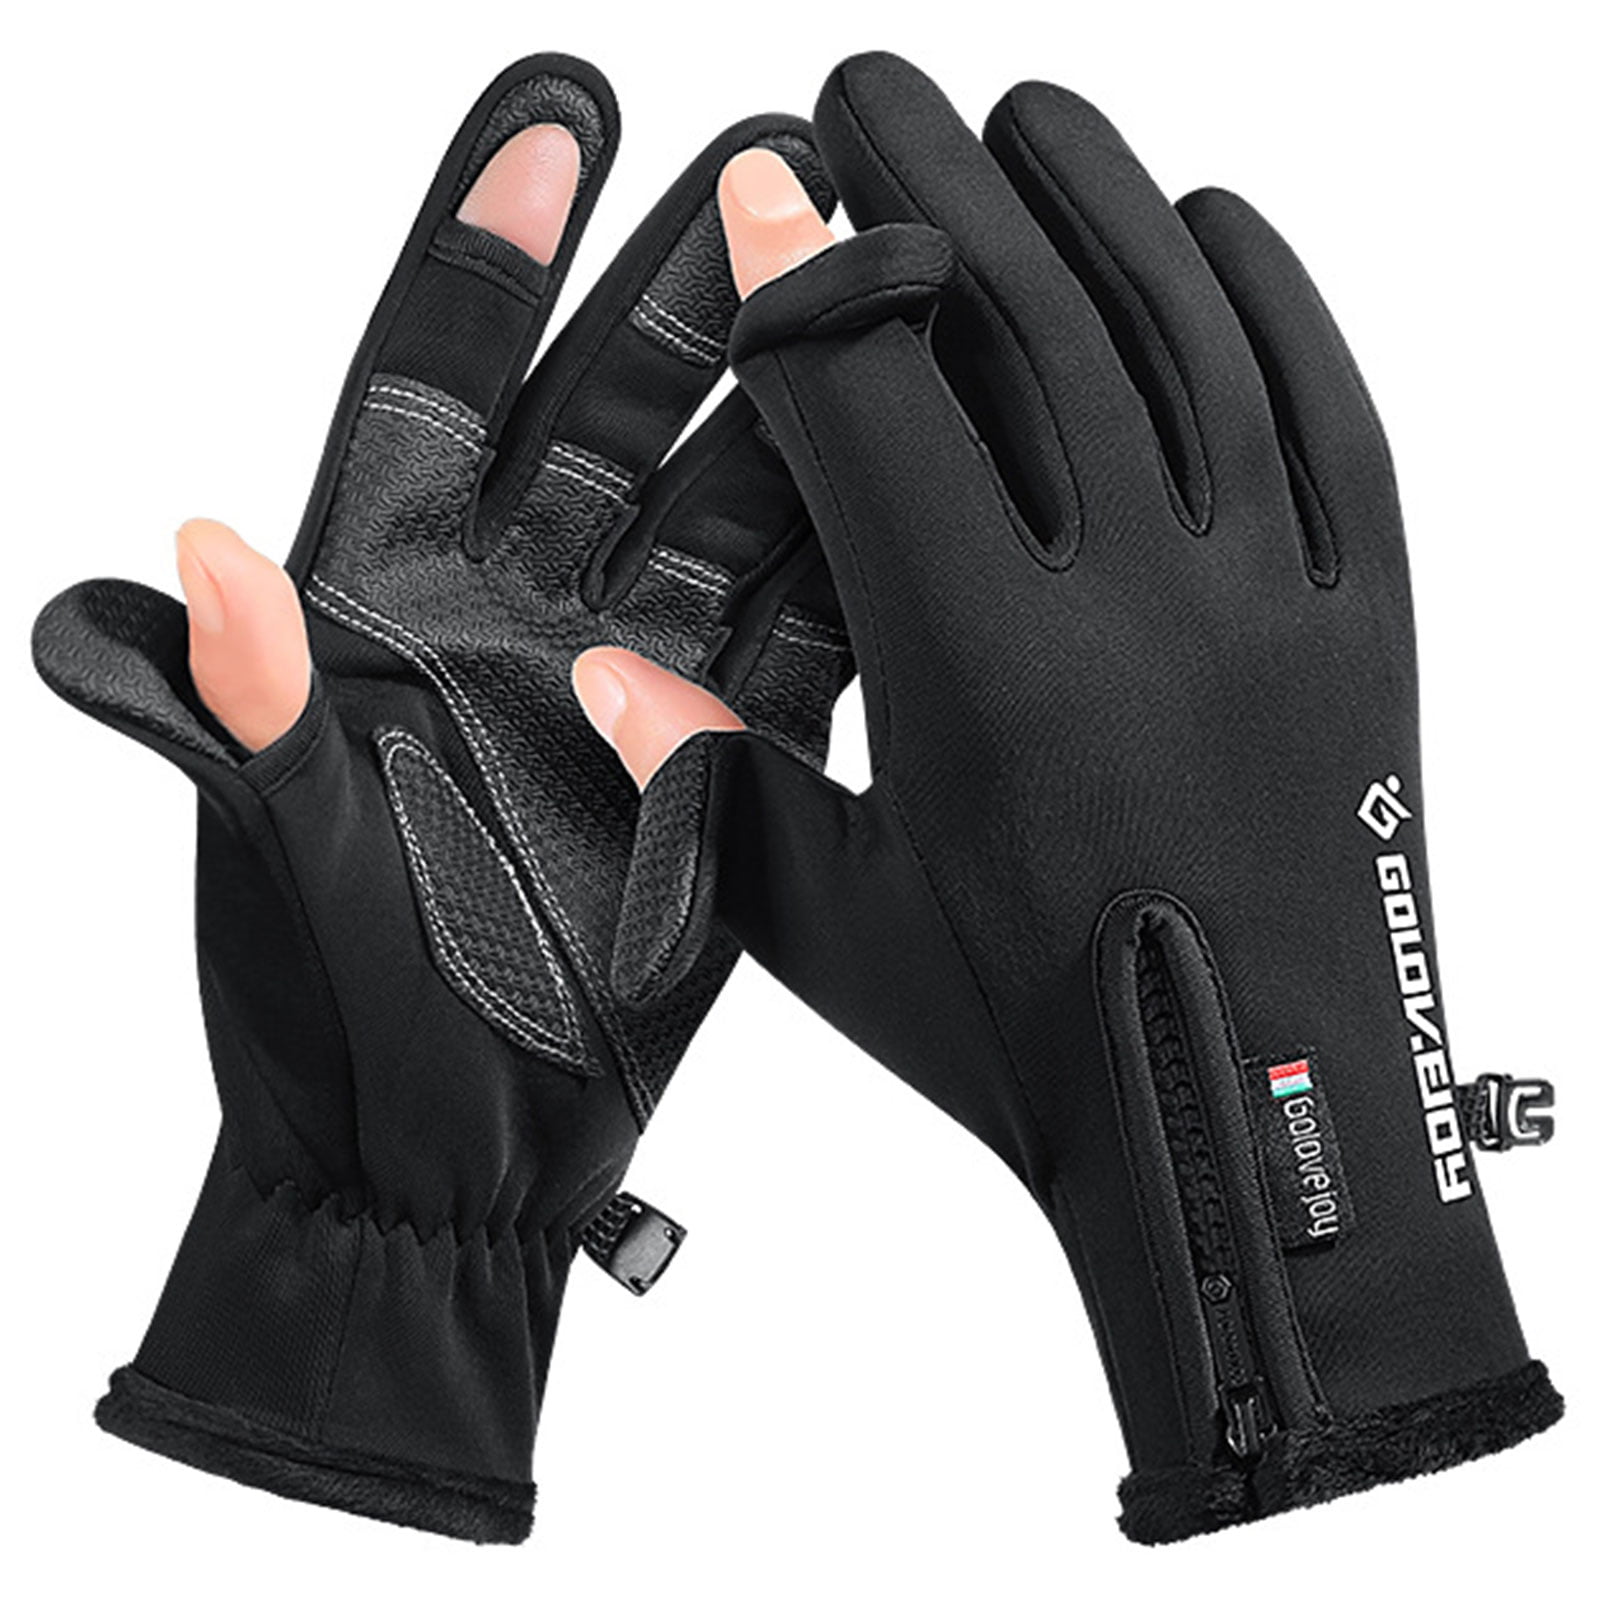 Outdoor lure fishing gloves men's winter palm anti-skid leakage finger  touch screen high-density waterproof windproof warm gloves 